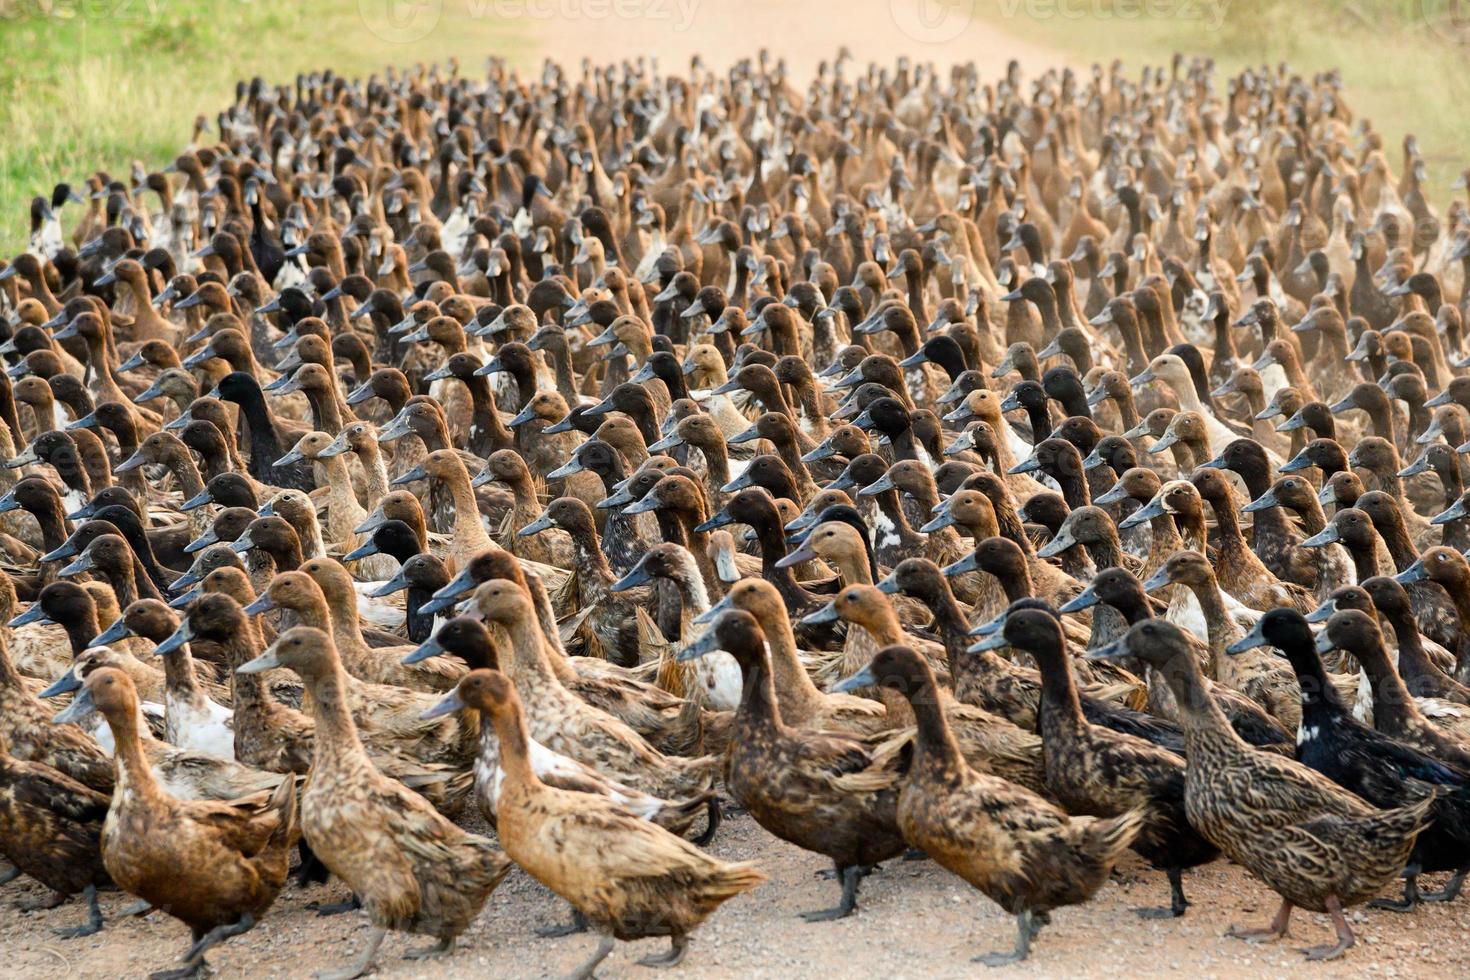 Flock of ducks walking on dirt road in plantation photo